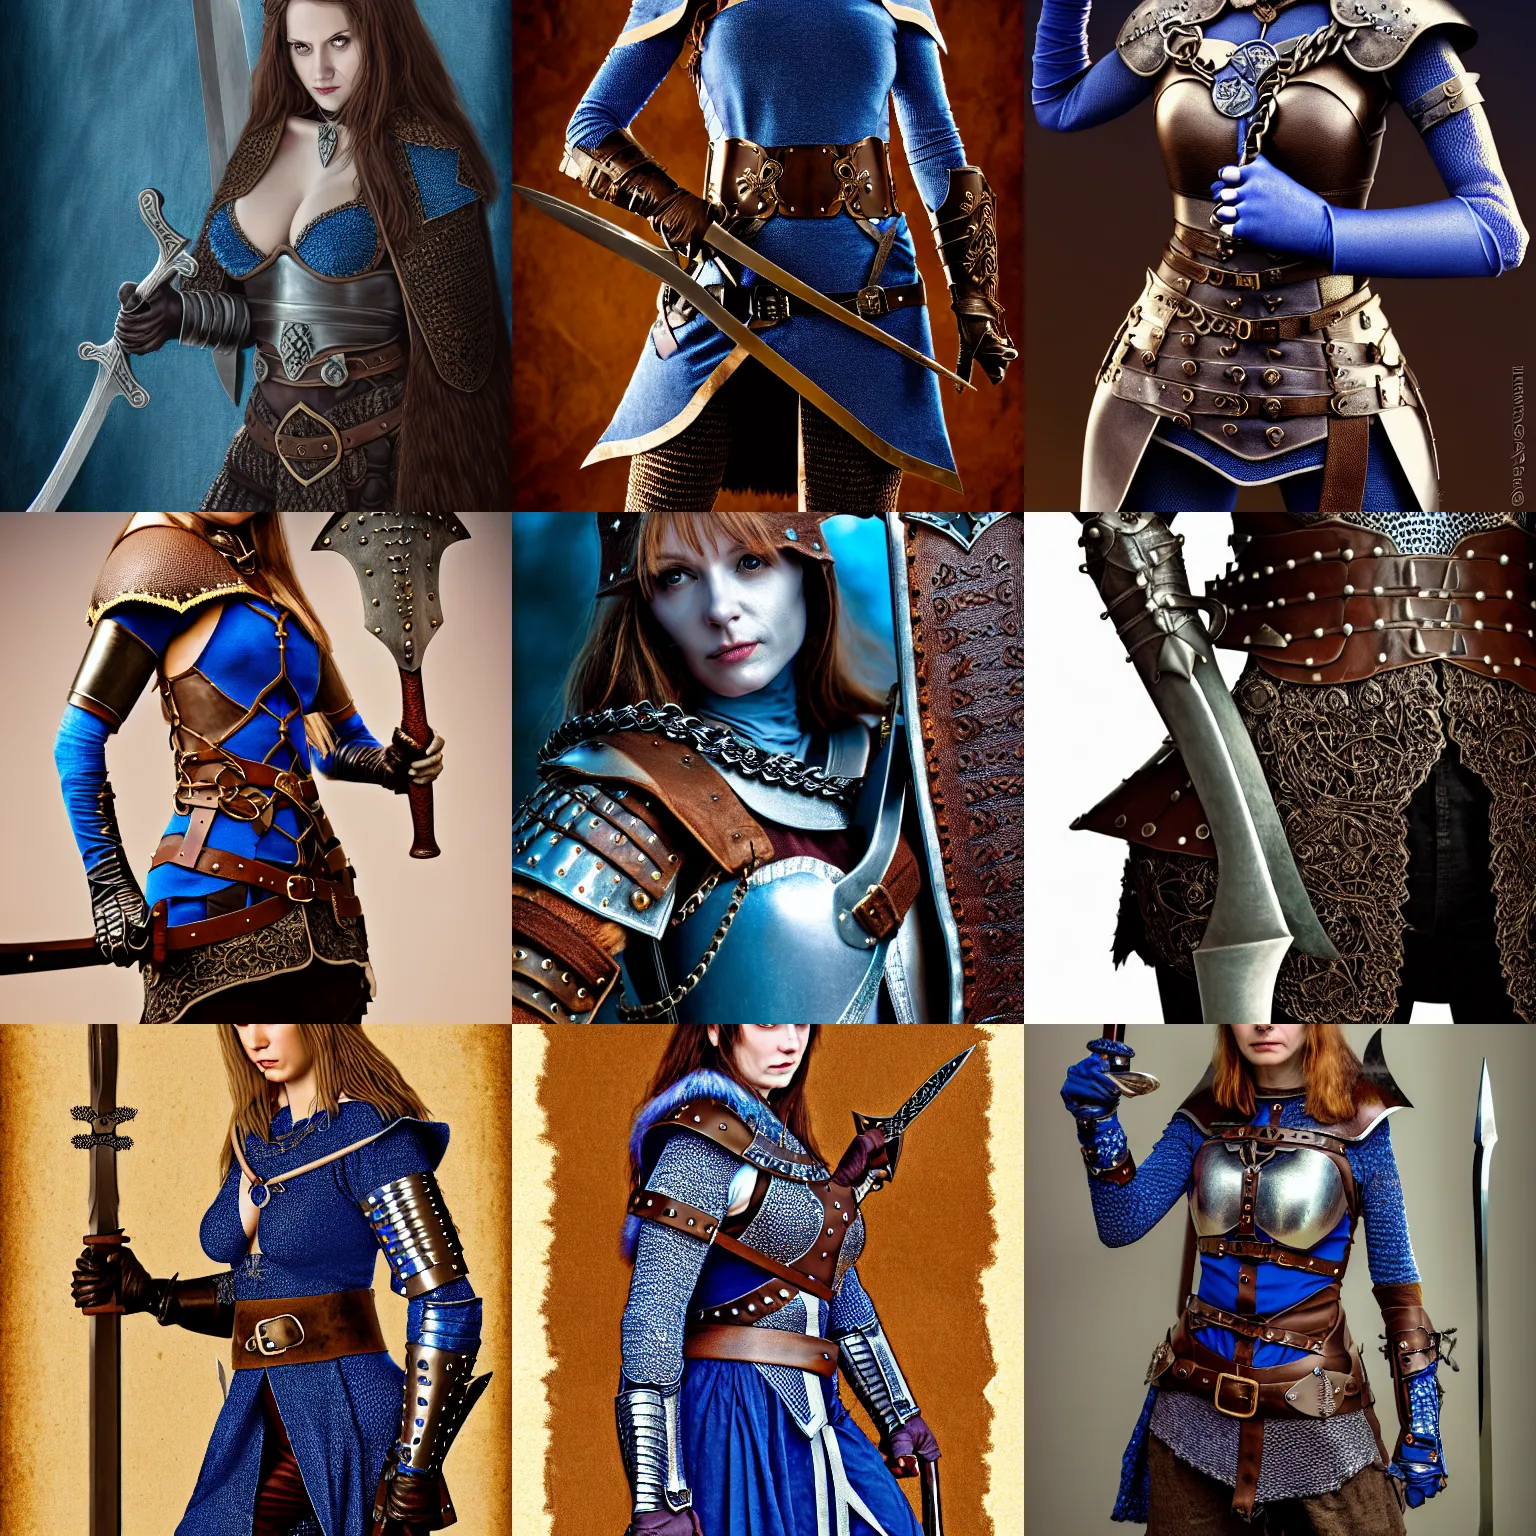 KREA - A young female Celtic warrior